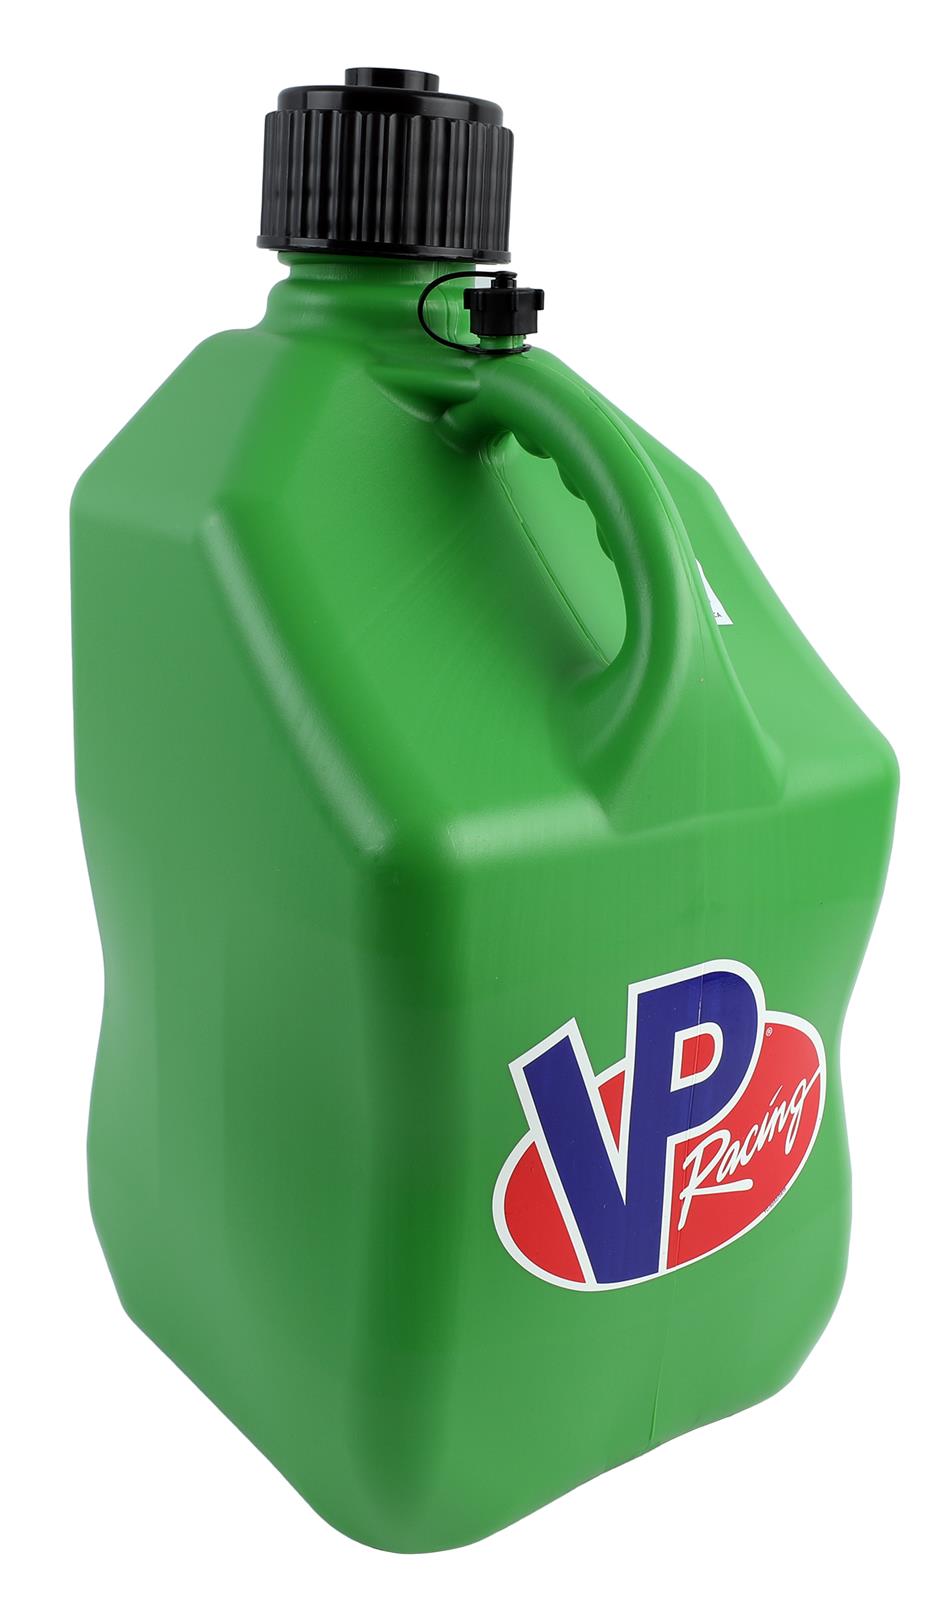 VP Racing Motorsports Fuel Jug - 5.5 gallons - Green